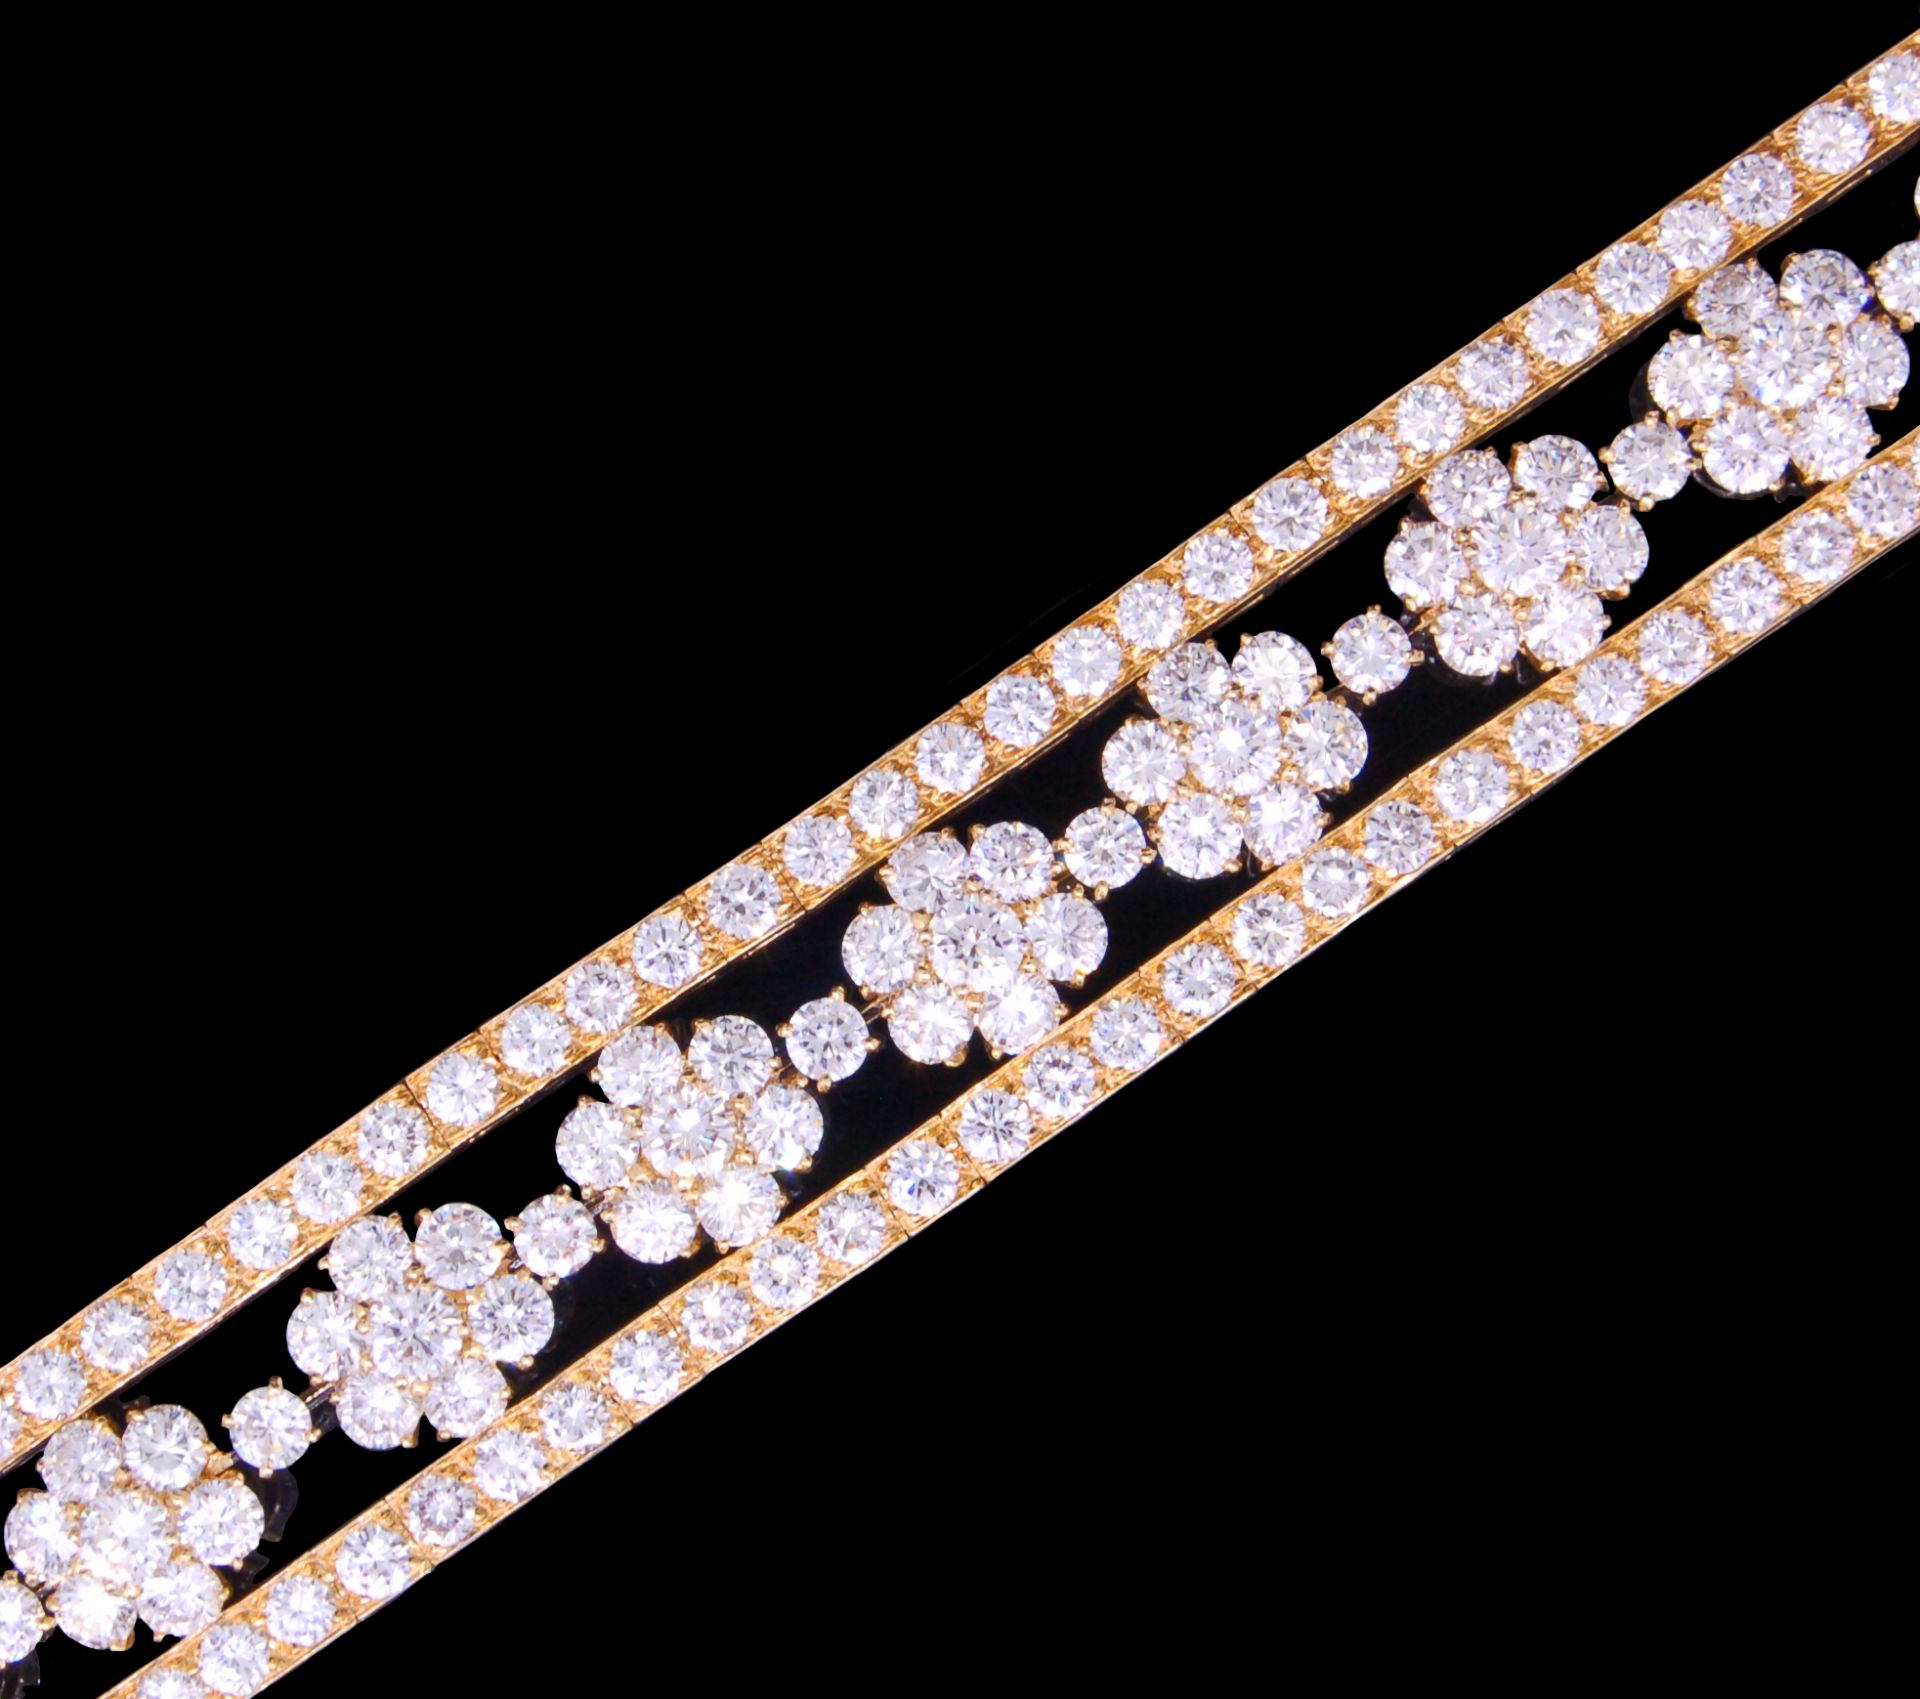 VAN CLEEF & ARPELS, AN IMPORTANT DIAMOND BRACELET - Image 3 of 6